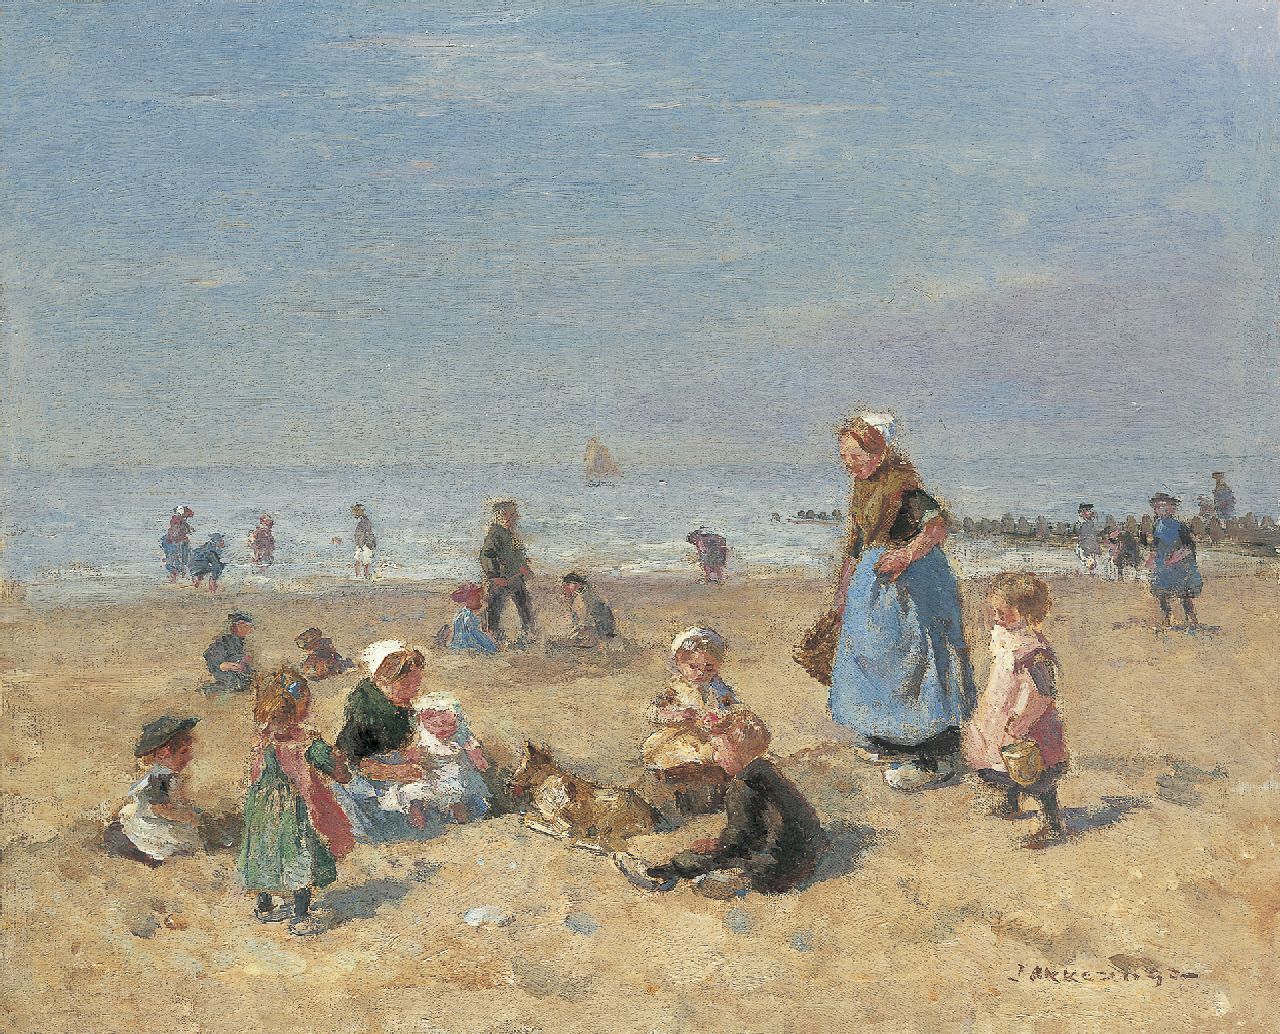 Akkeringa J.E.H.  | 'Johannes Evert' Hendrik Akkeringa, A sunny day at the beach, oil on canvas 29.2 x 36.1 cm, signed l.r.